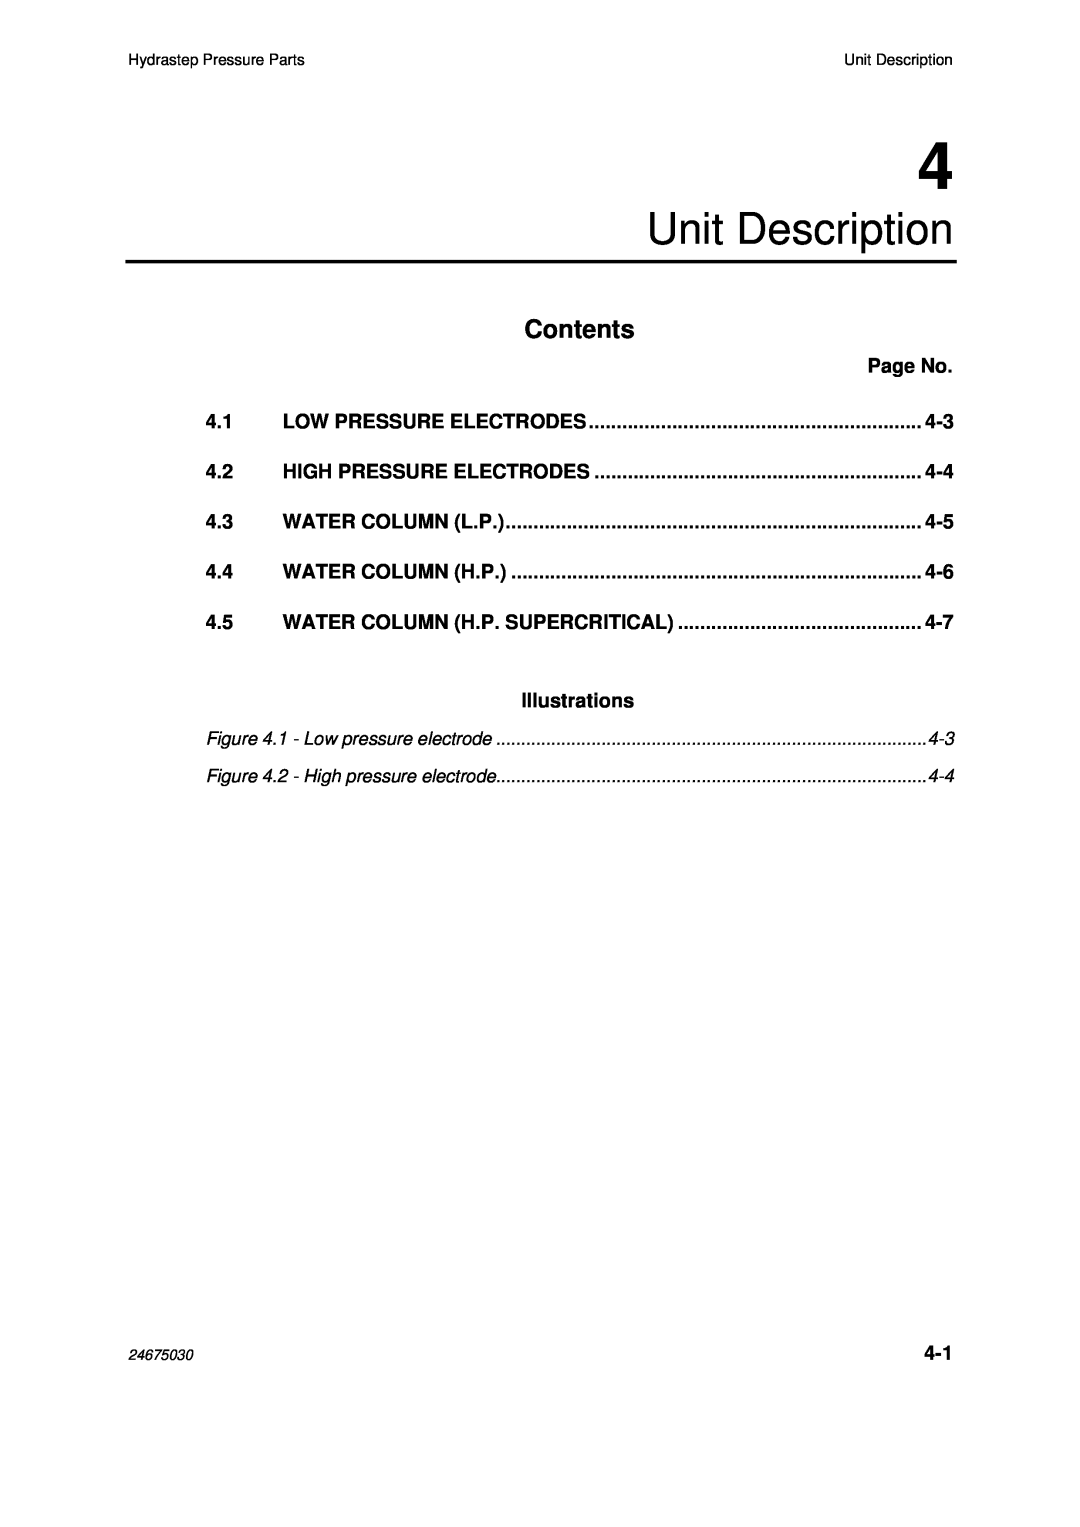 Emerson 2468CD, 2468CB manual Unit Description, Contents 